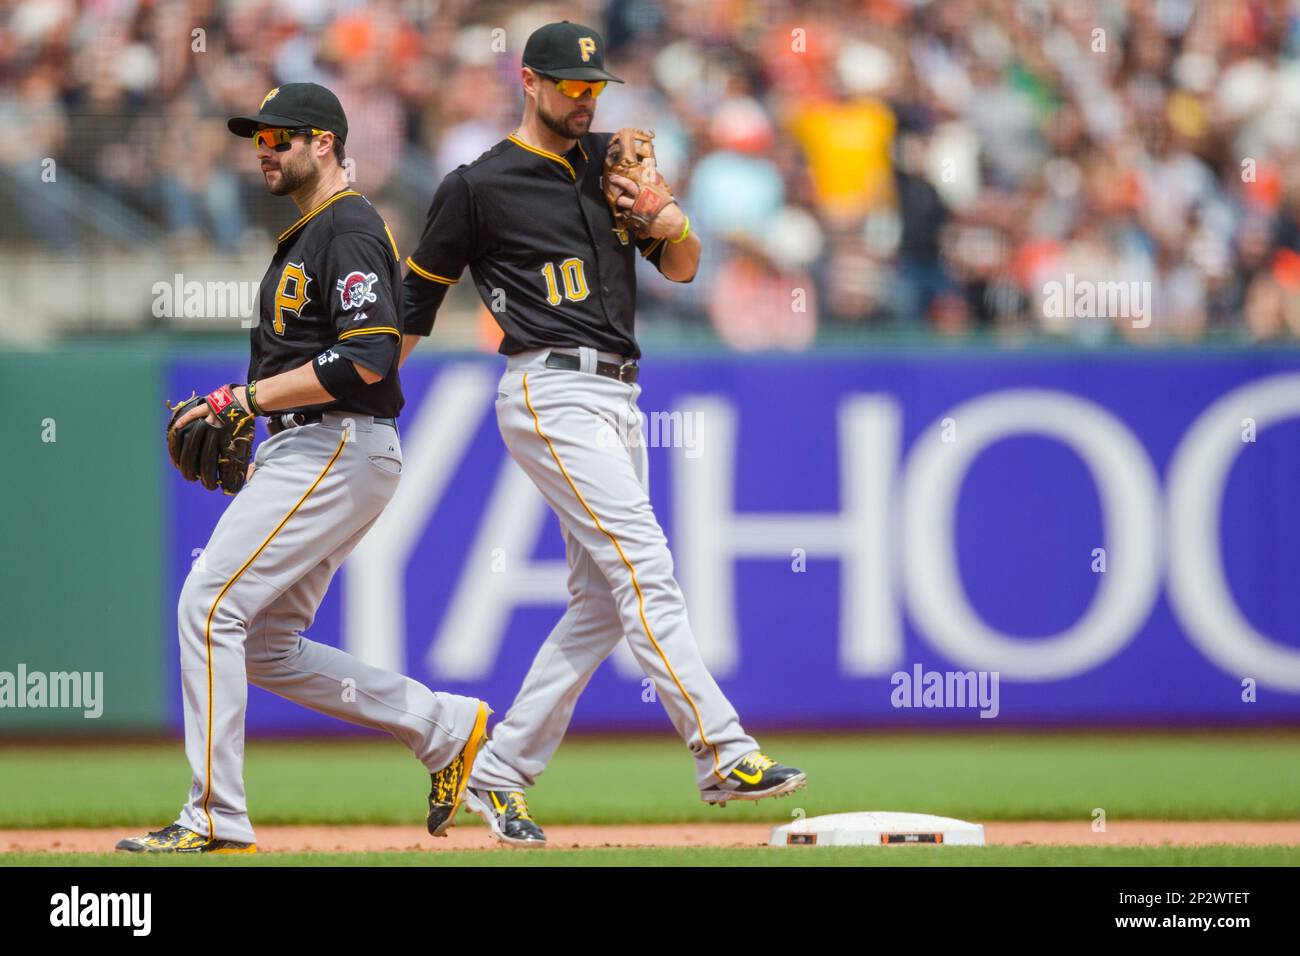 June 03, 2015: Pittsburgh Pirates shortstop Jordy Mercer (10) taps